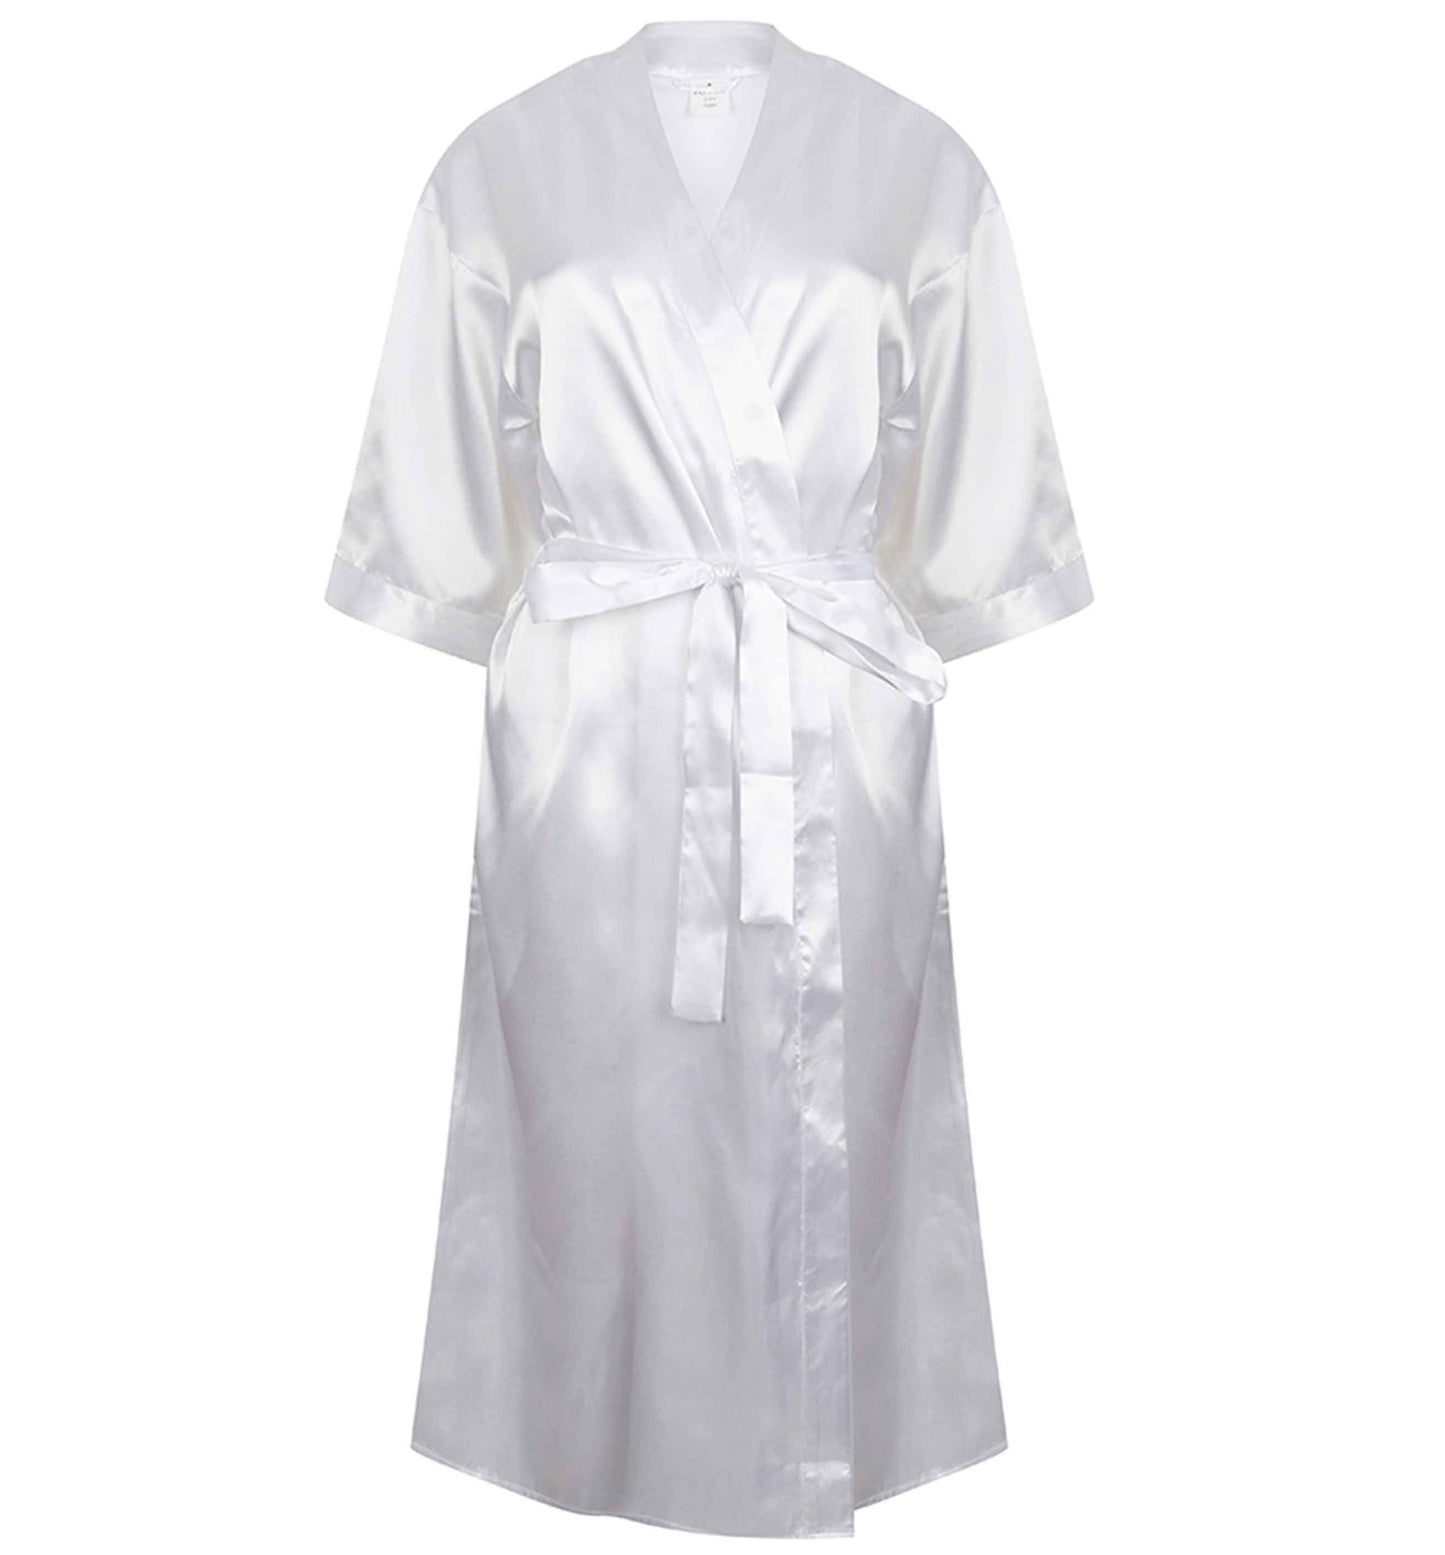 Best mum ever! | 8-18 | Kimono style satin robe | Ladies dressing gown